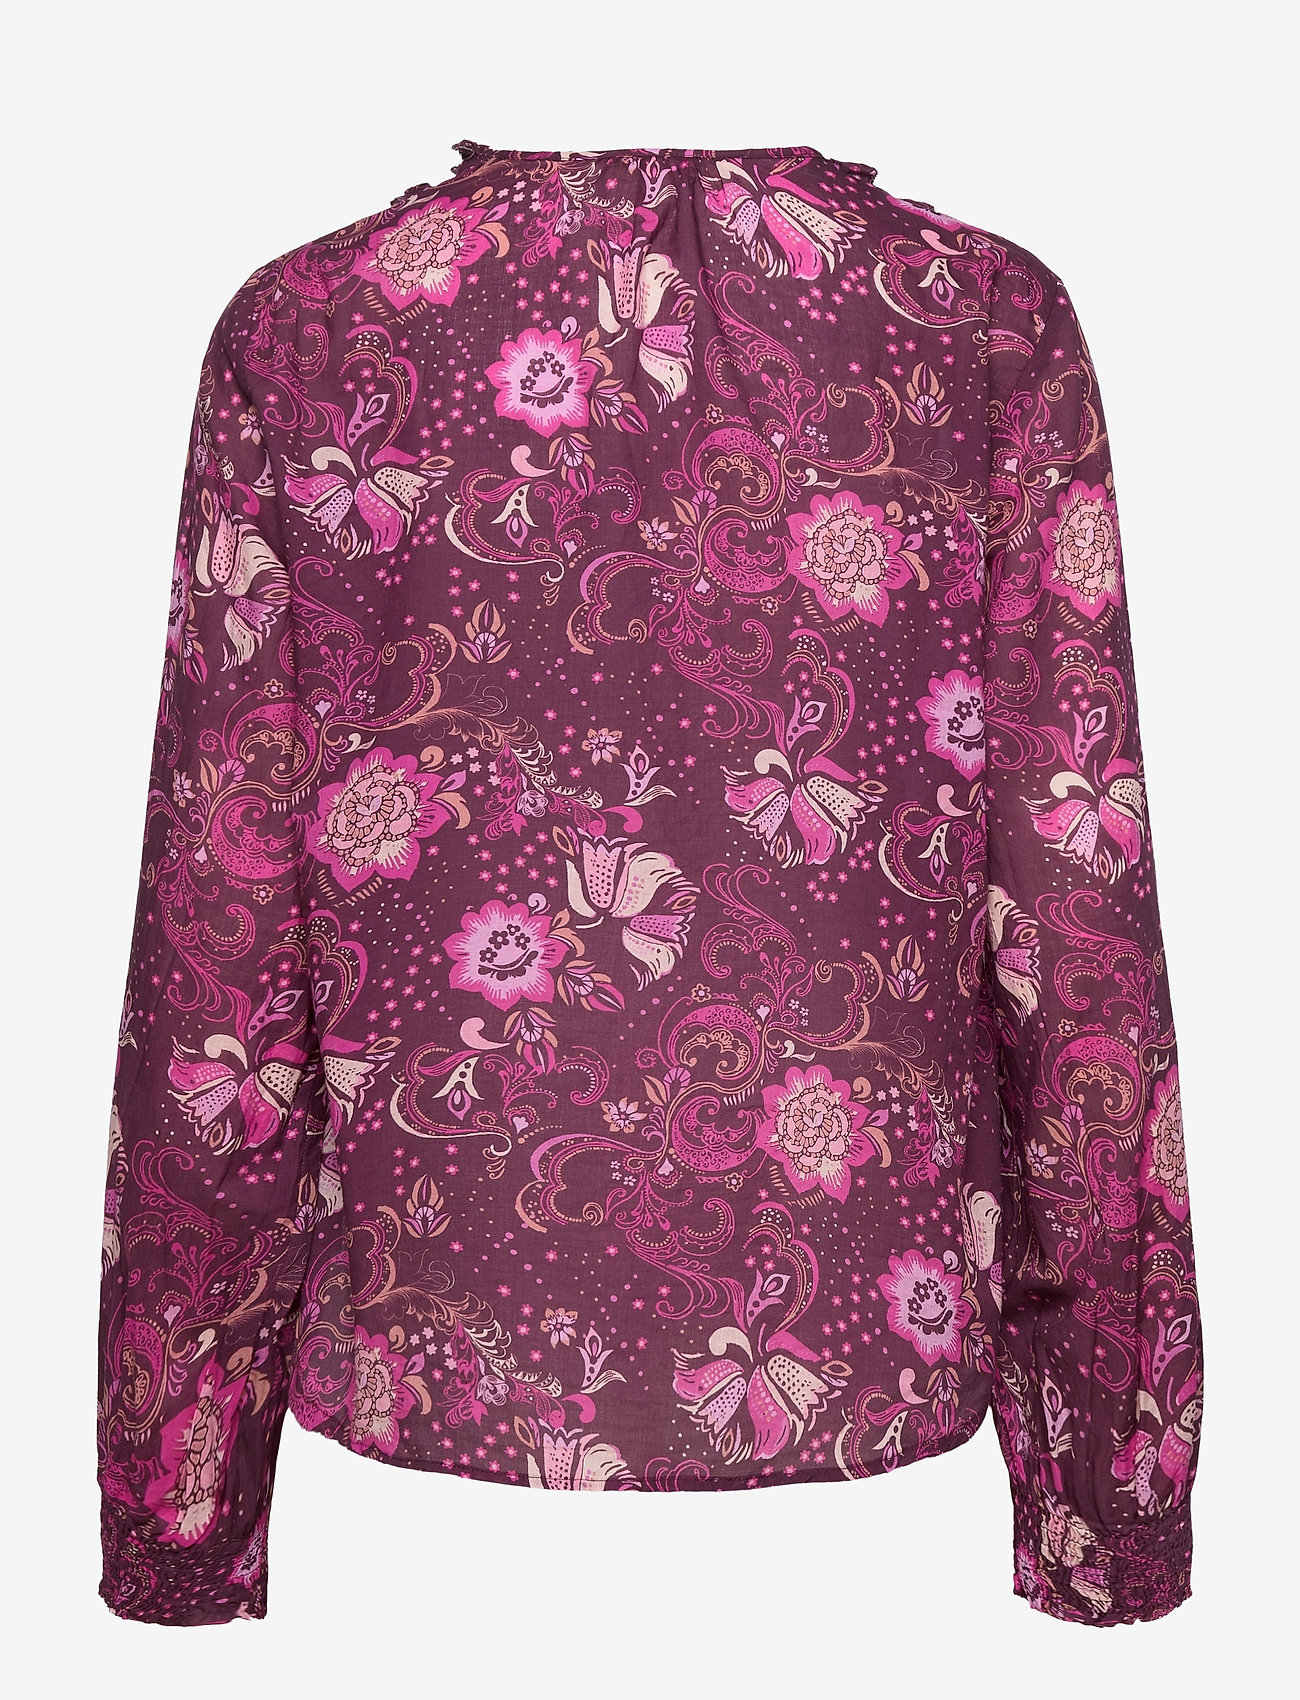 ODD MOLLY - Doreen Blouse - blouses met lange mouwen - dark purple - 1